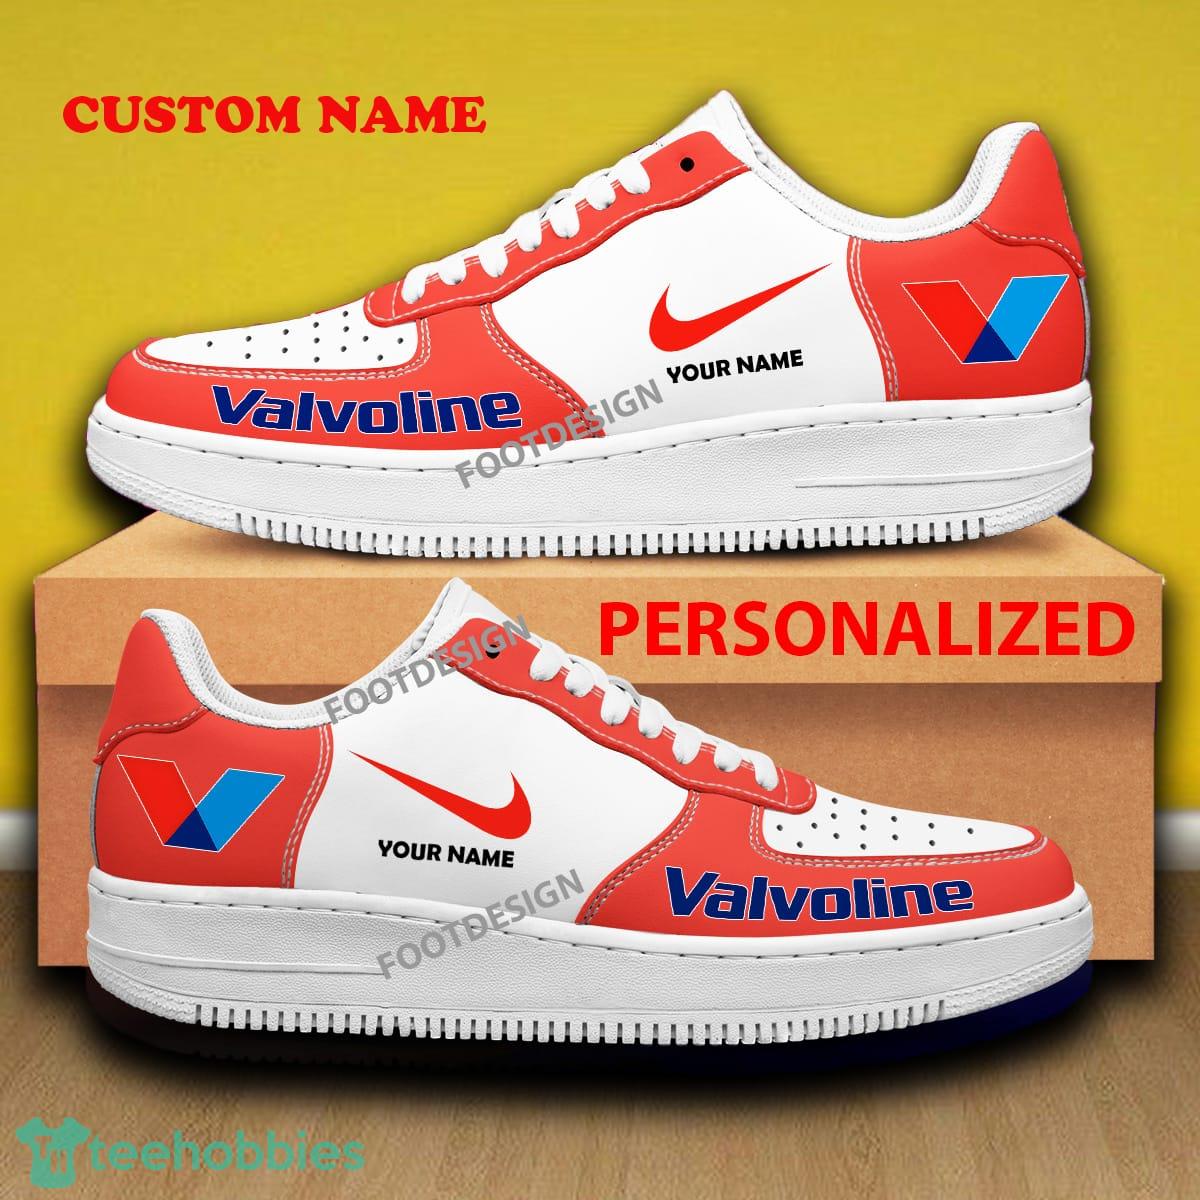 Custom Name Valvoline Air Force 1 Sneakers Brand All Over Print Gift - Custom Name Valvoline Air Force 1 Sneakers Brand All Over Print Gift